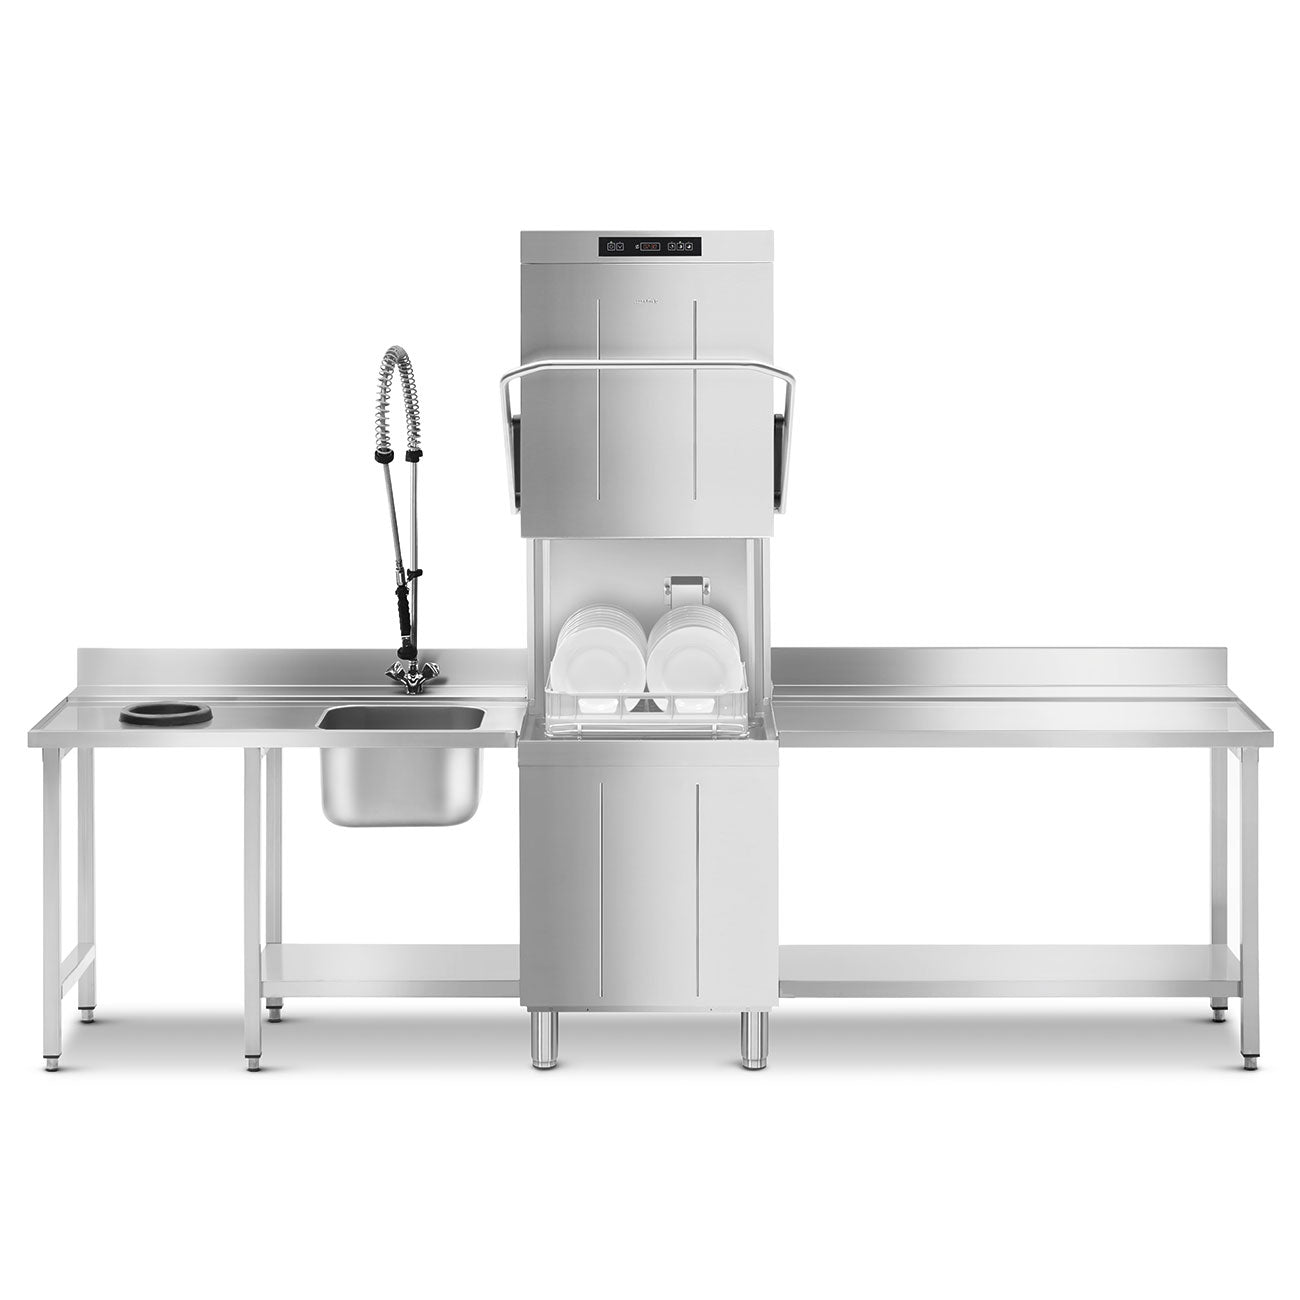 Smeg Ecoline range Hood Type Dishwasher, 3 Wash Programs 500x500 SPH505